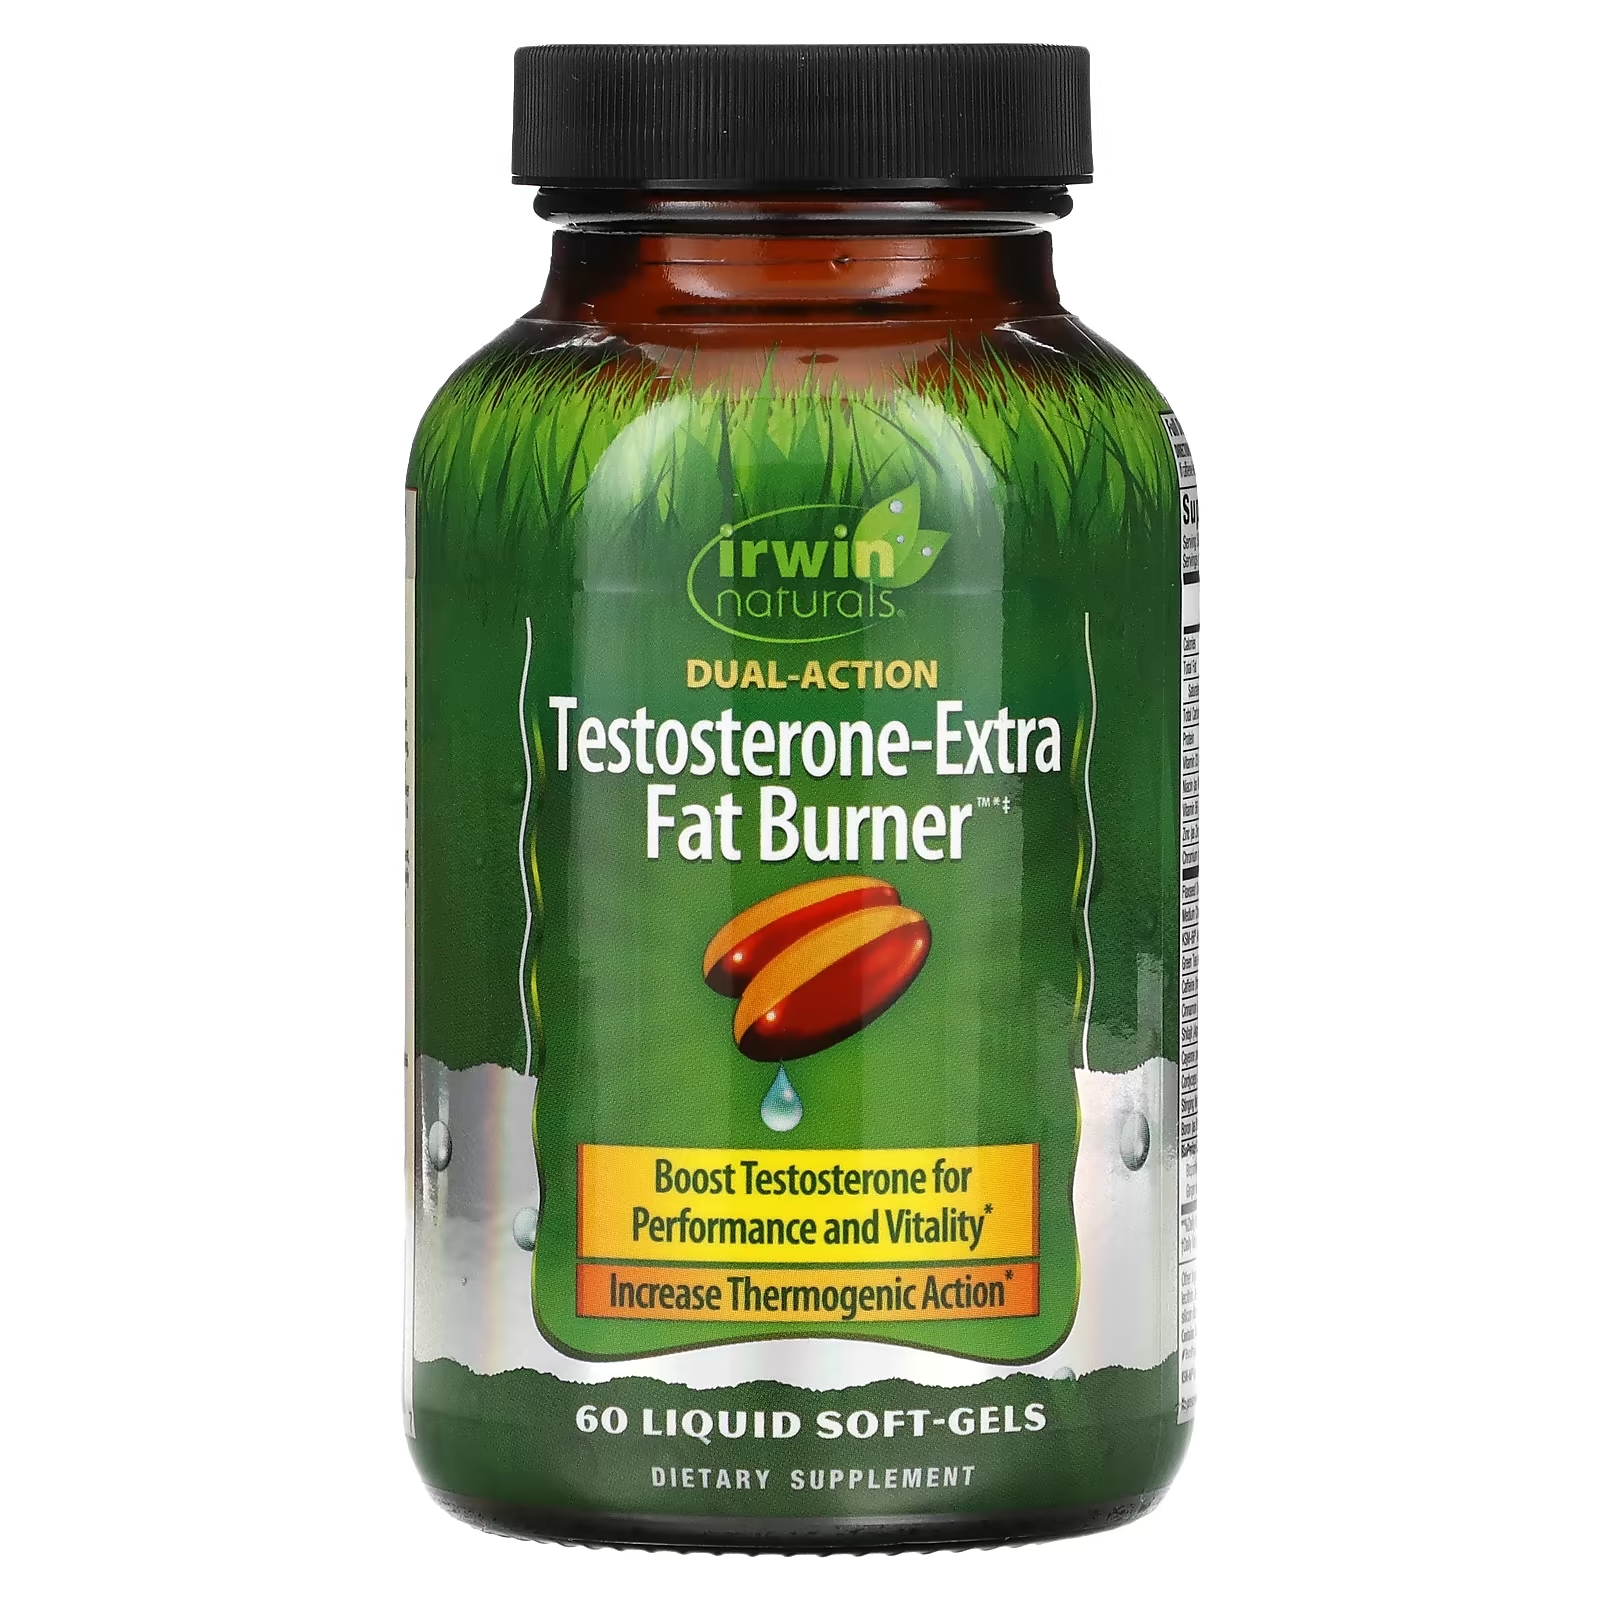 Irwin Naturals Testosterone-Extra Fat Burner, 60 мягких таблеток irwin naturals коллагеновые пептиды астаксантин тип i ii и iii 60 мягких таблеток